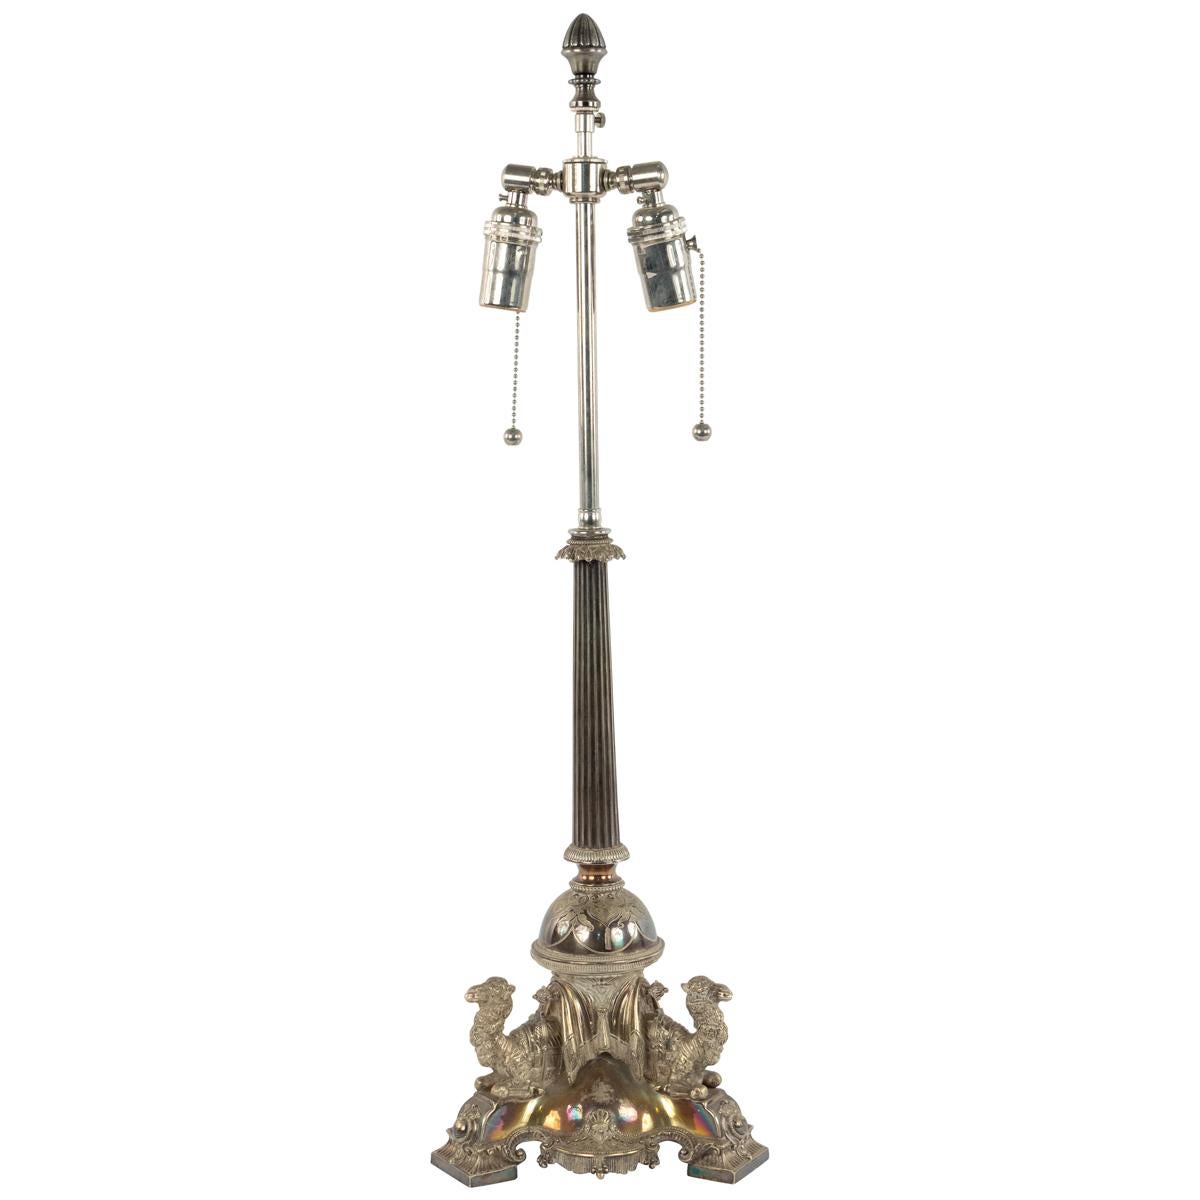 Englische viktorianische versilberte Kamelien-Tischlampe